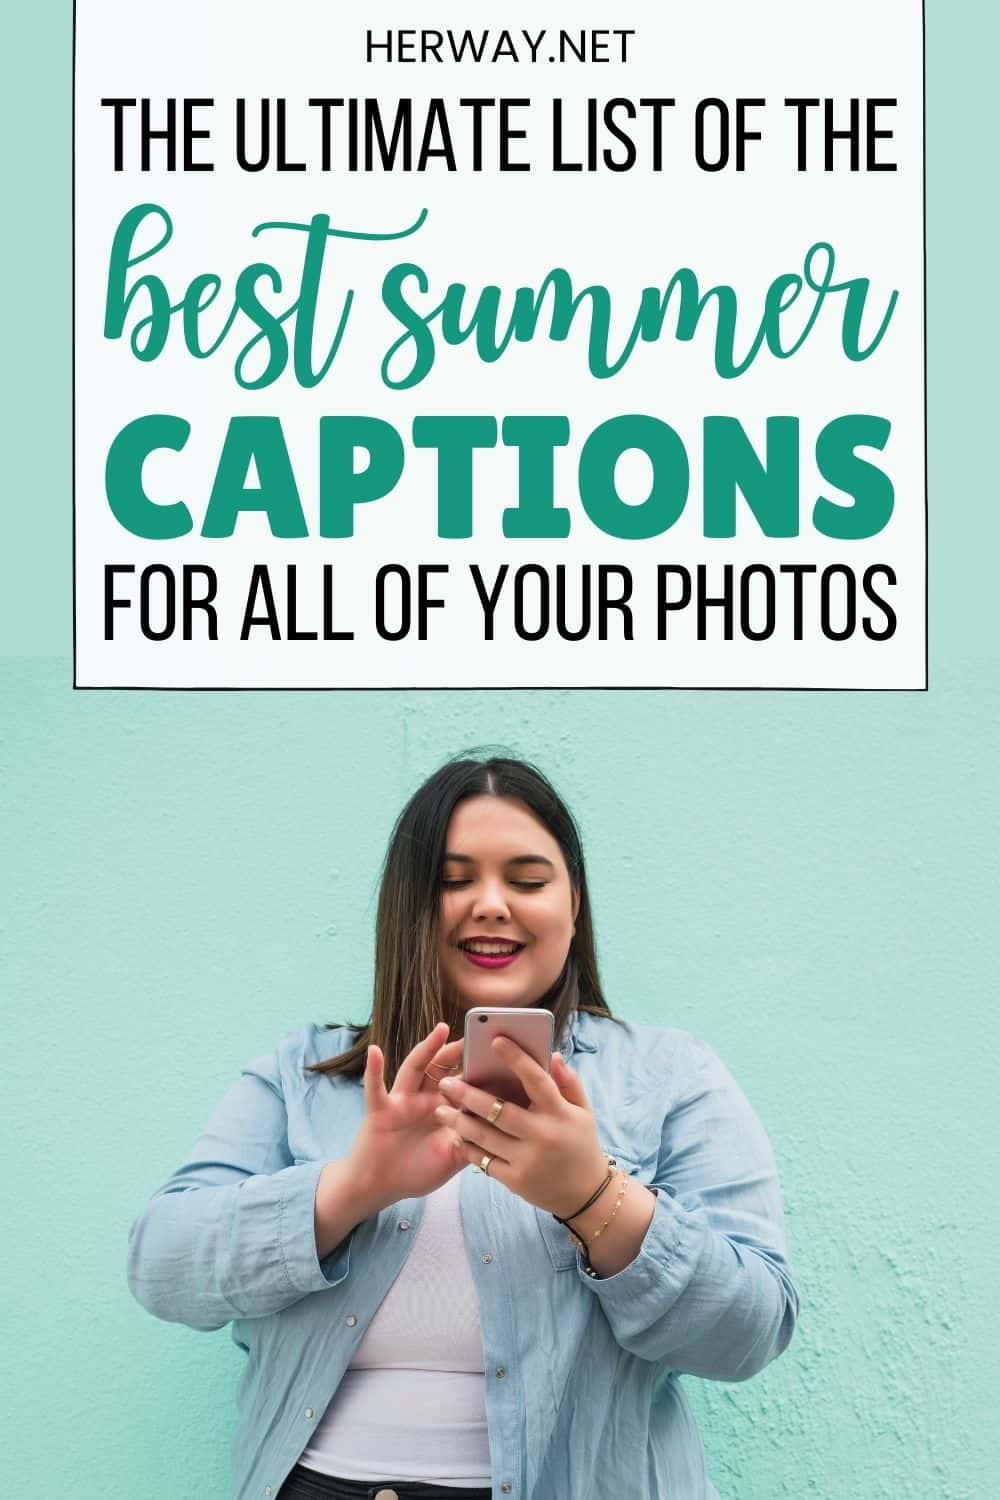 177 Best Summer Captions For Facebook Pinterest